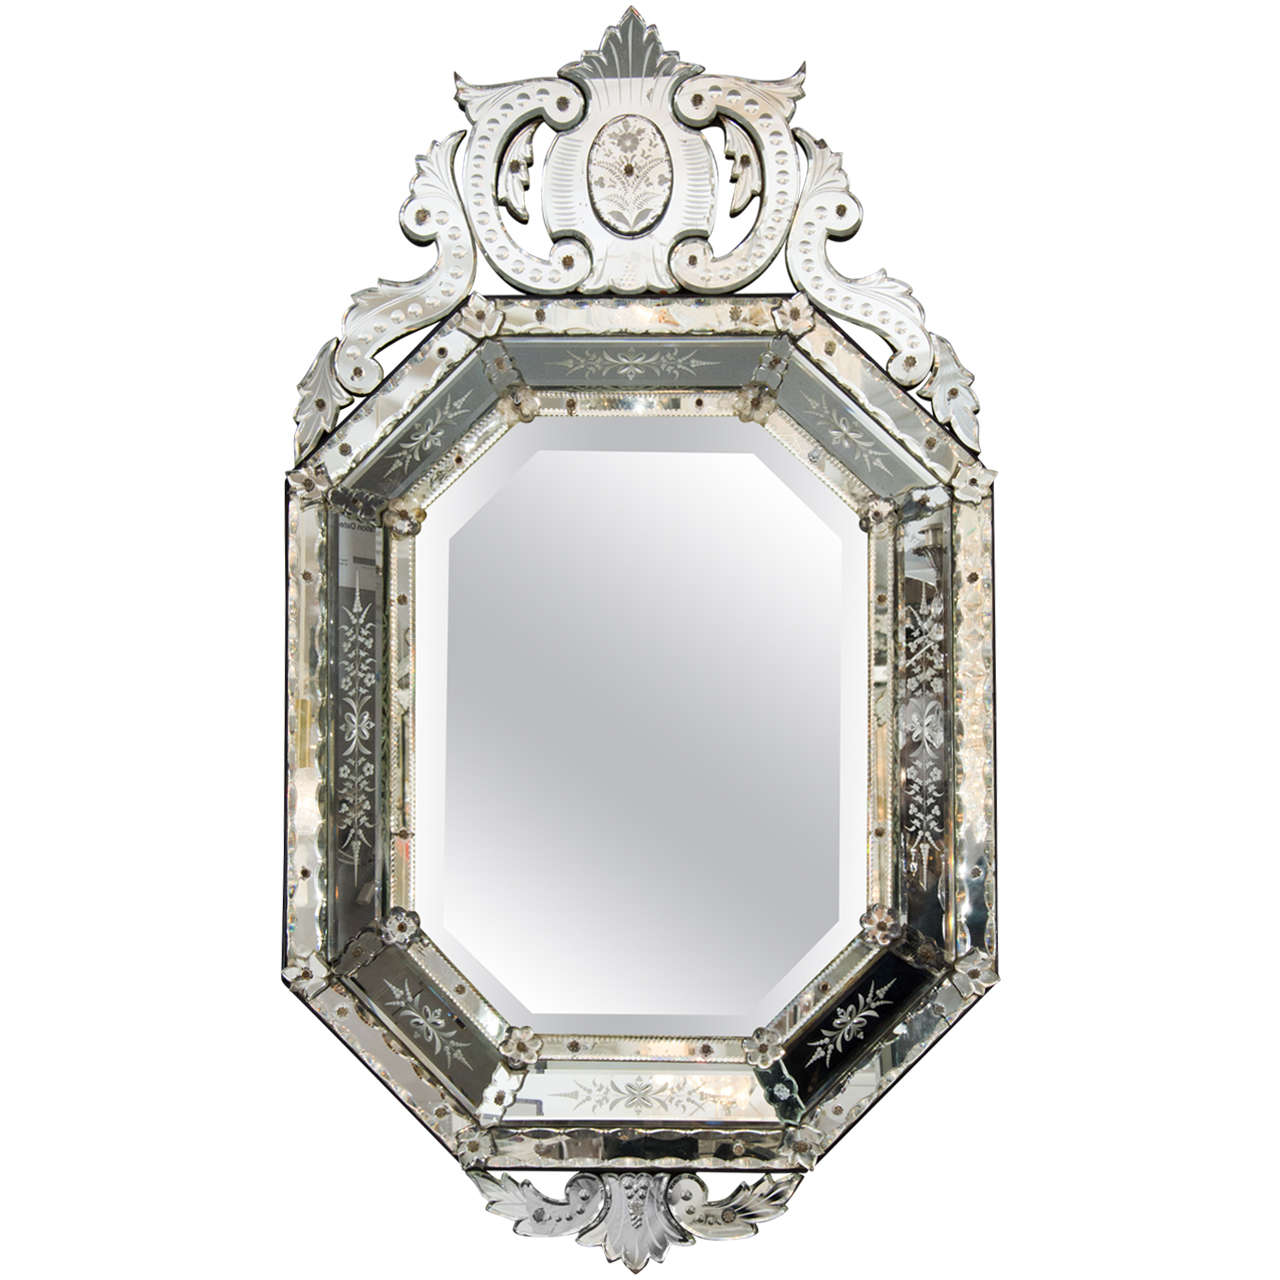 Octagonal Antique Venetian Mirror: A Timeless Reflection Of Beauty